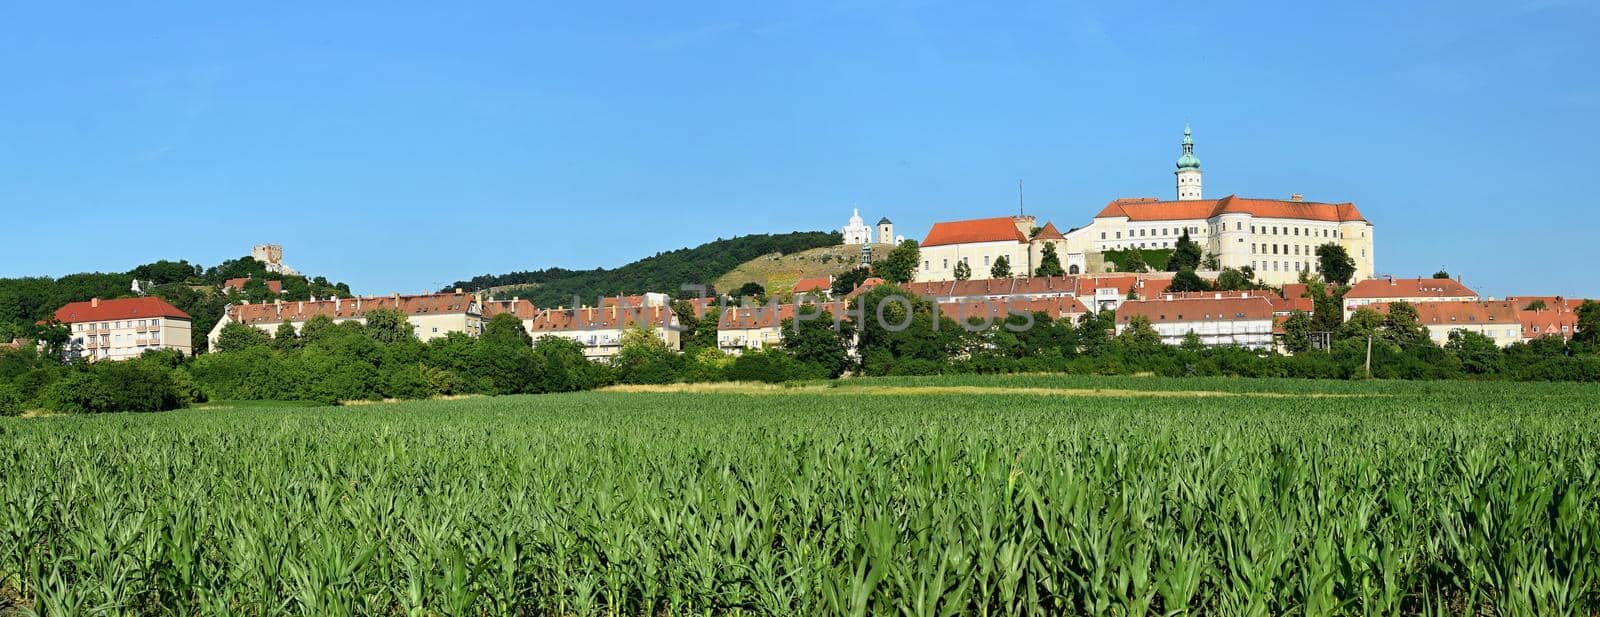 Castle of Mikulov, South Moravia. Czech Republic.